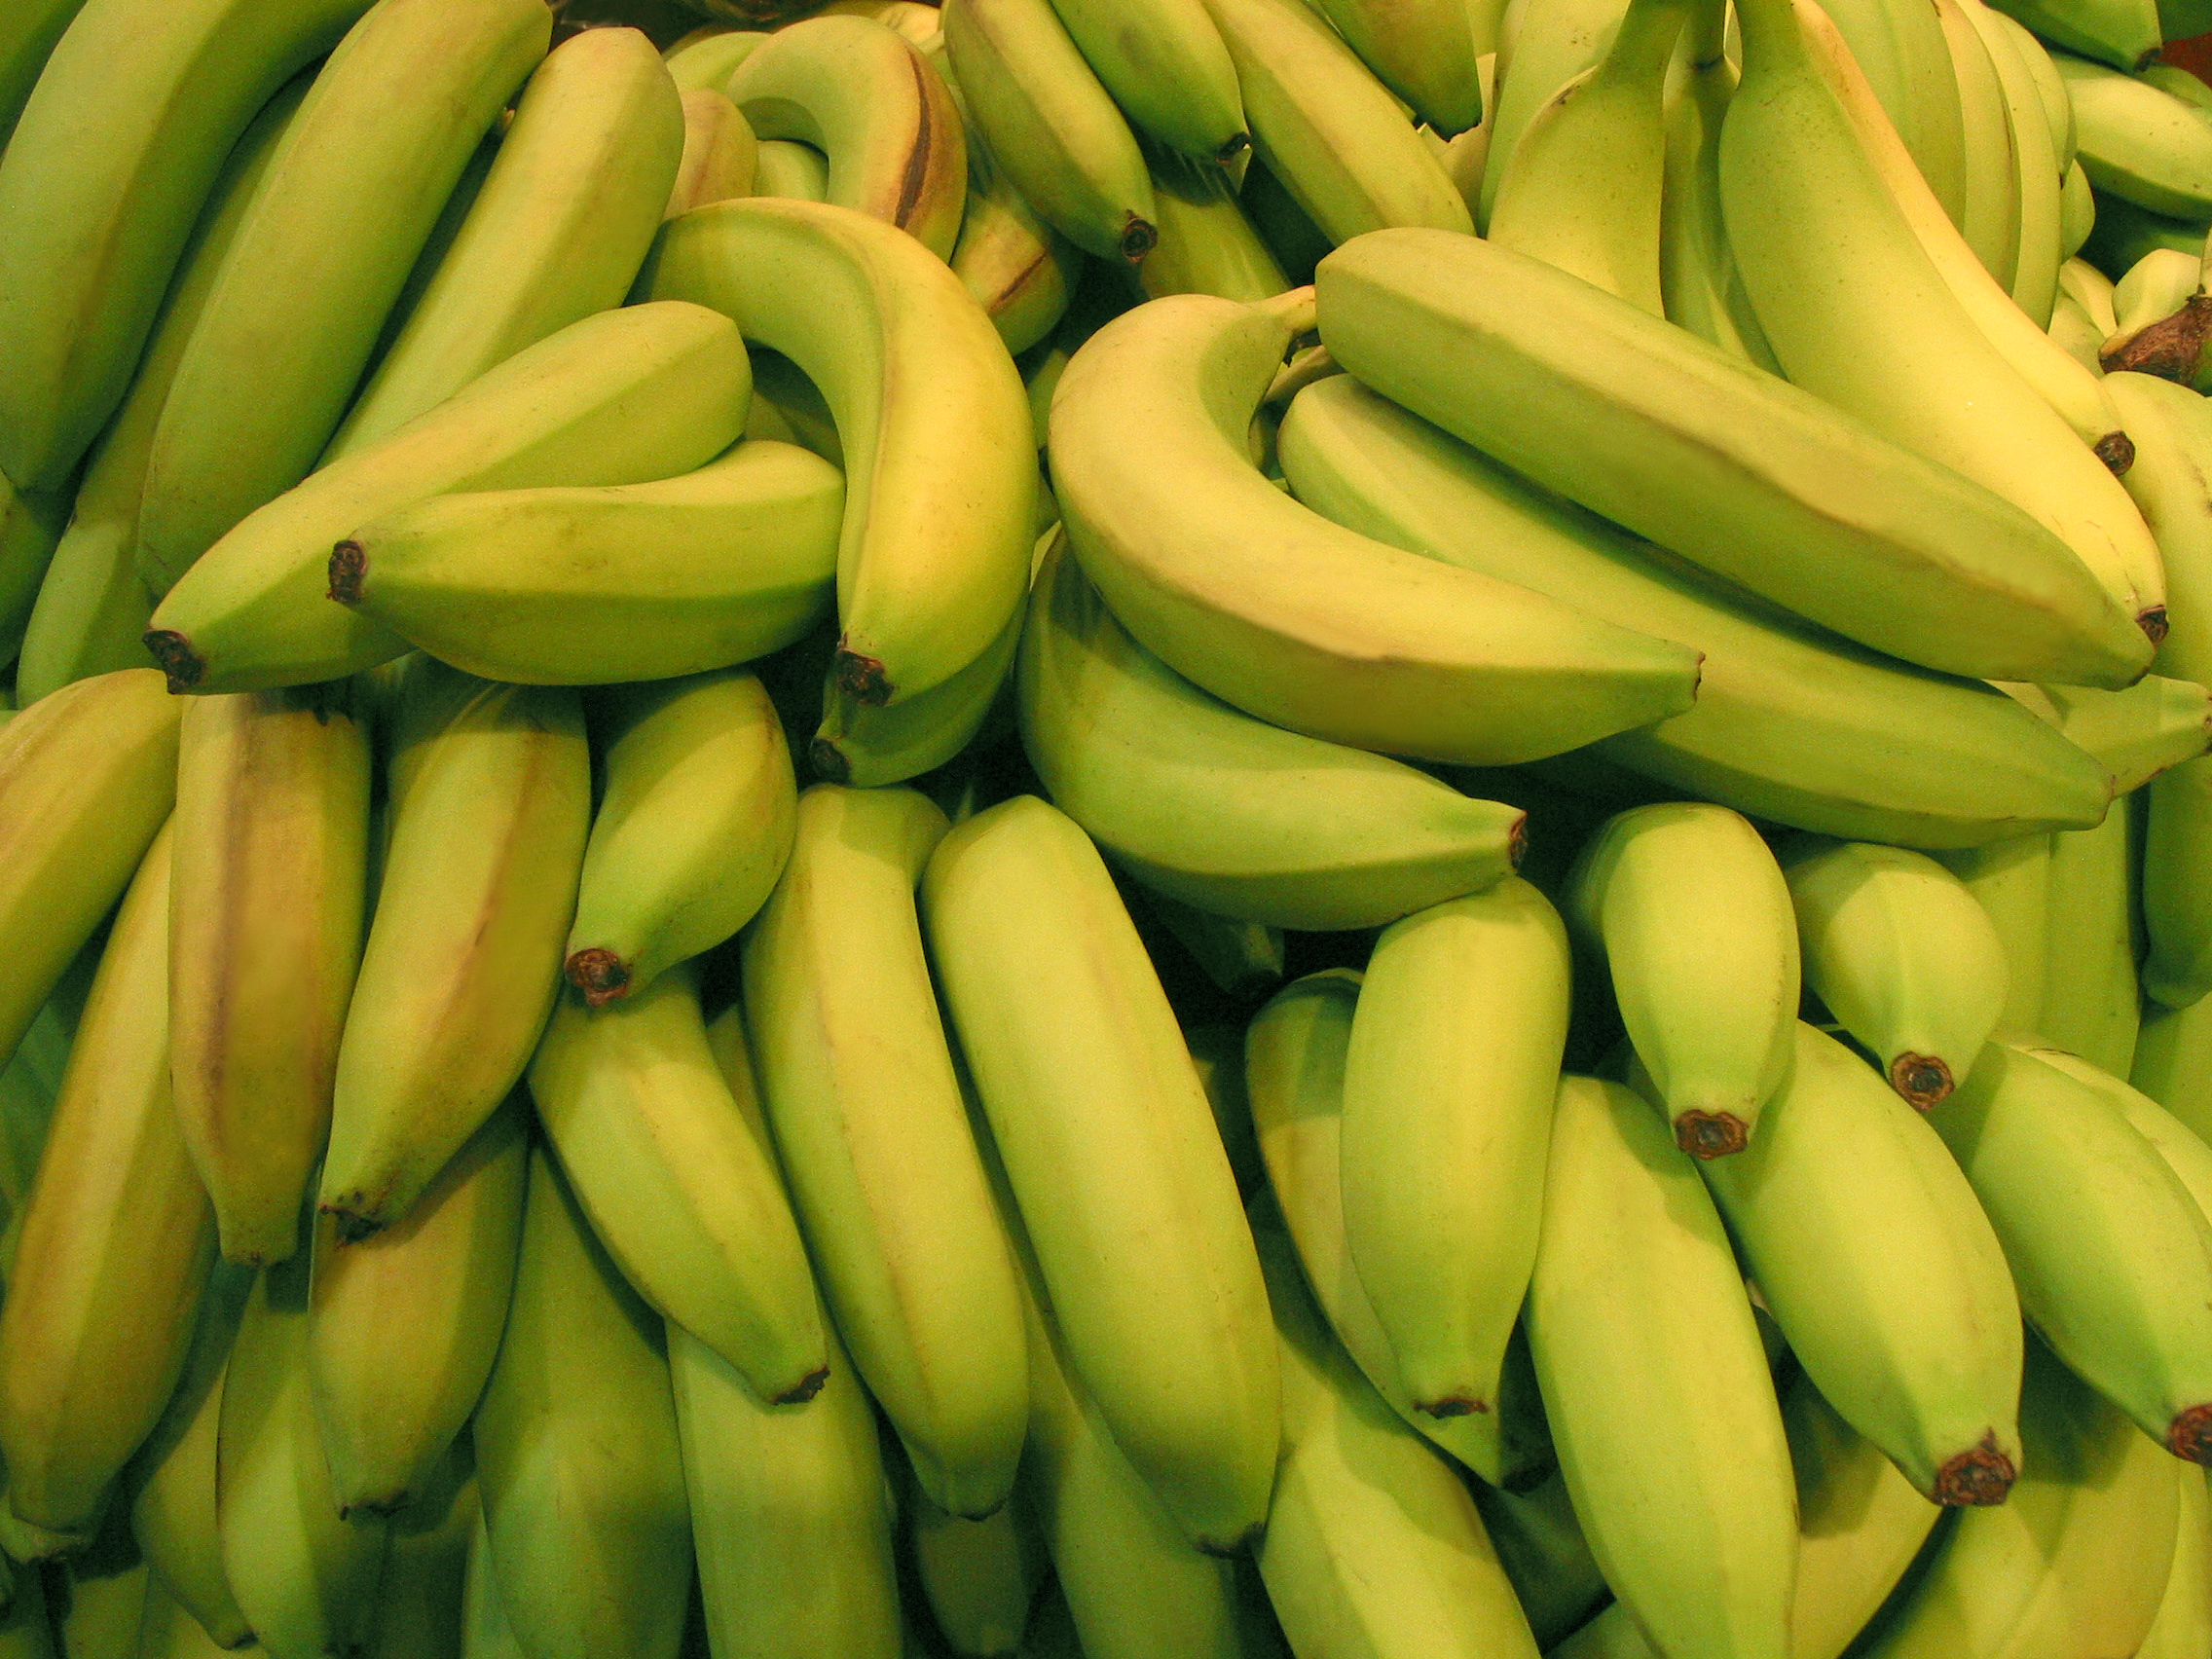 FREE Green Banana Photo, Fresh Bananas Image, Royalty-Free Fruit ...